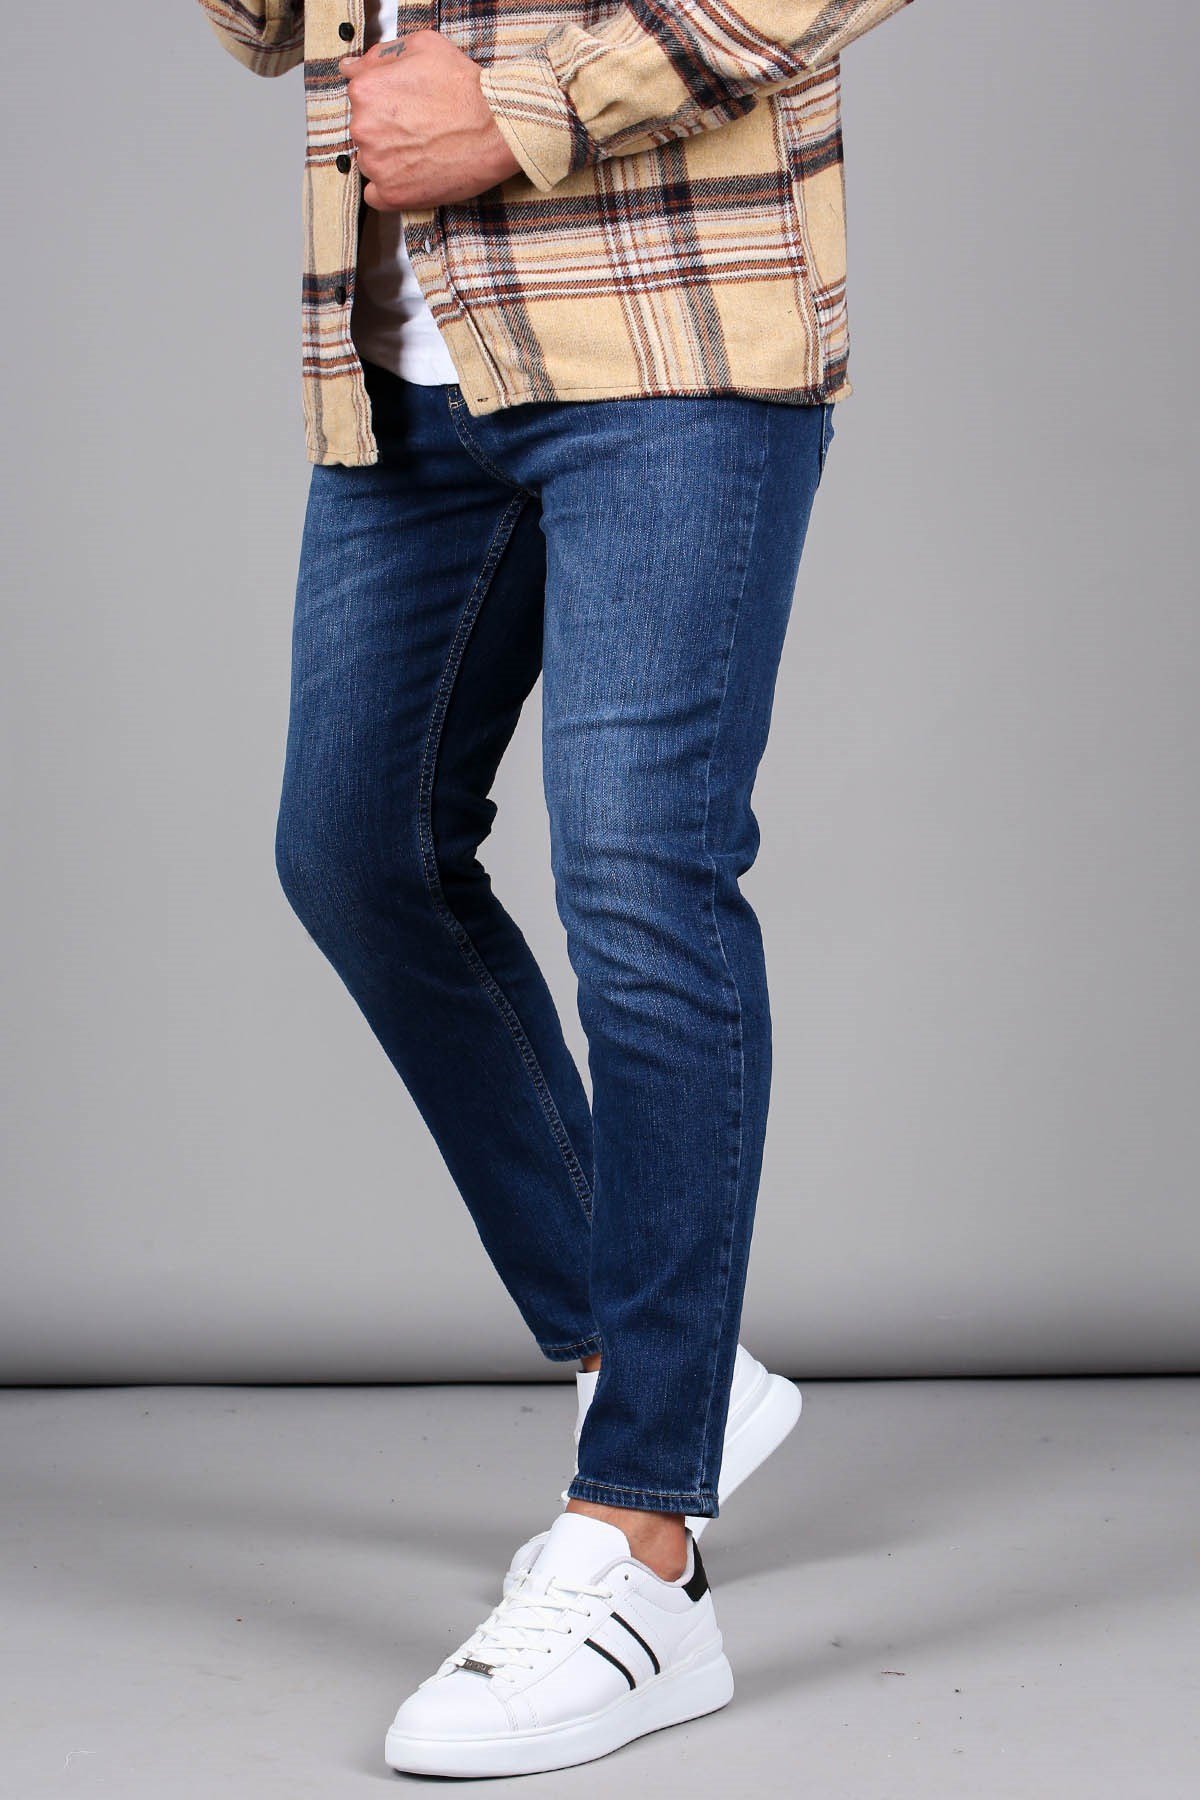 Navy Blue, dark Blue super Skintight skinny leather jeans tight fit 